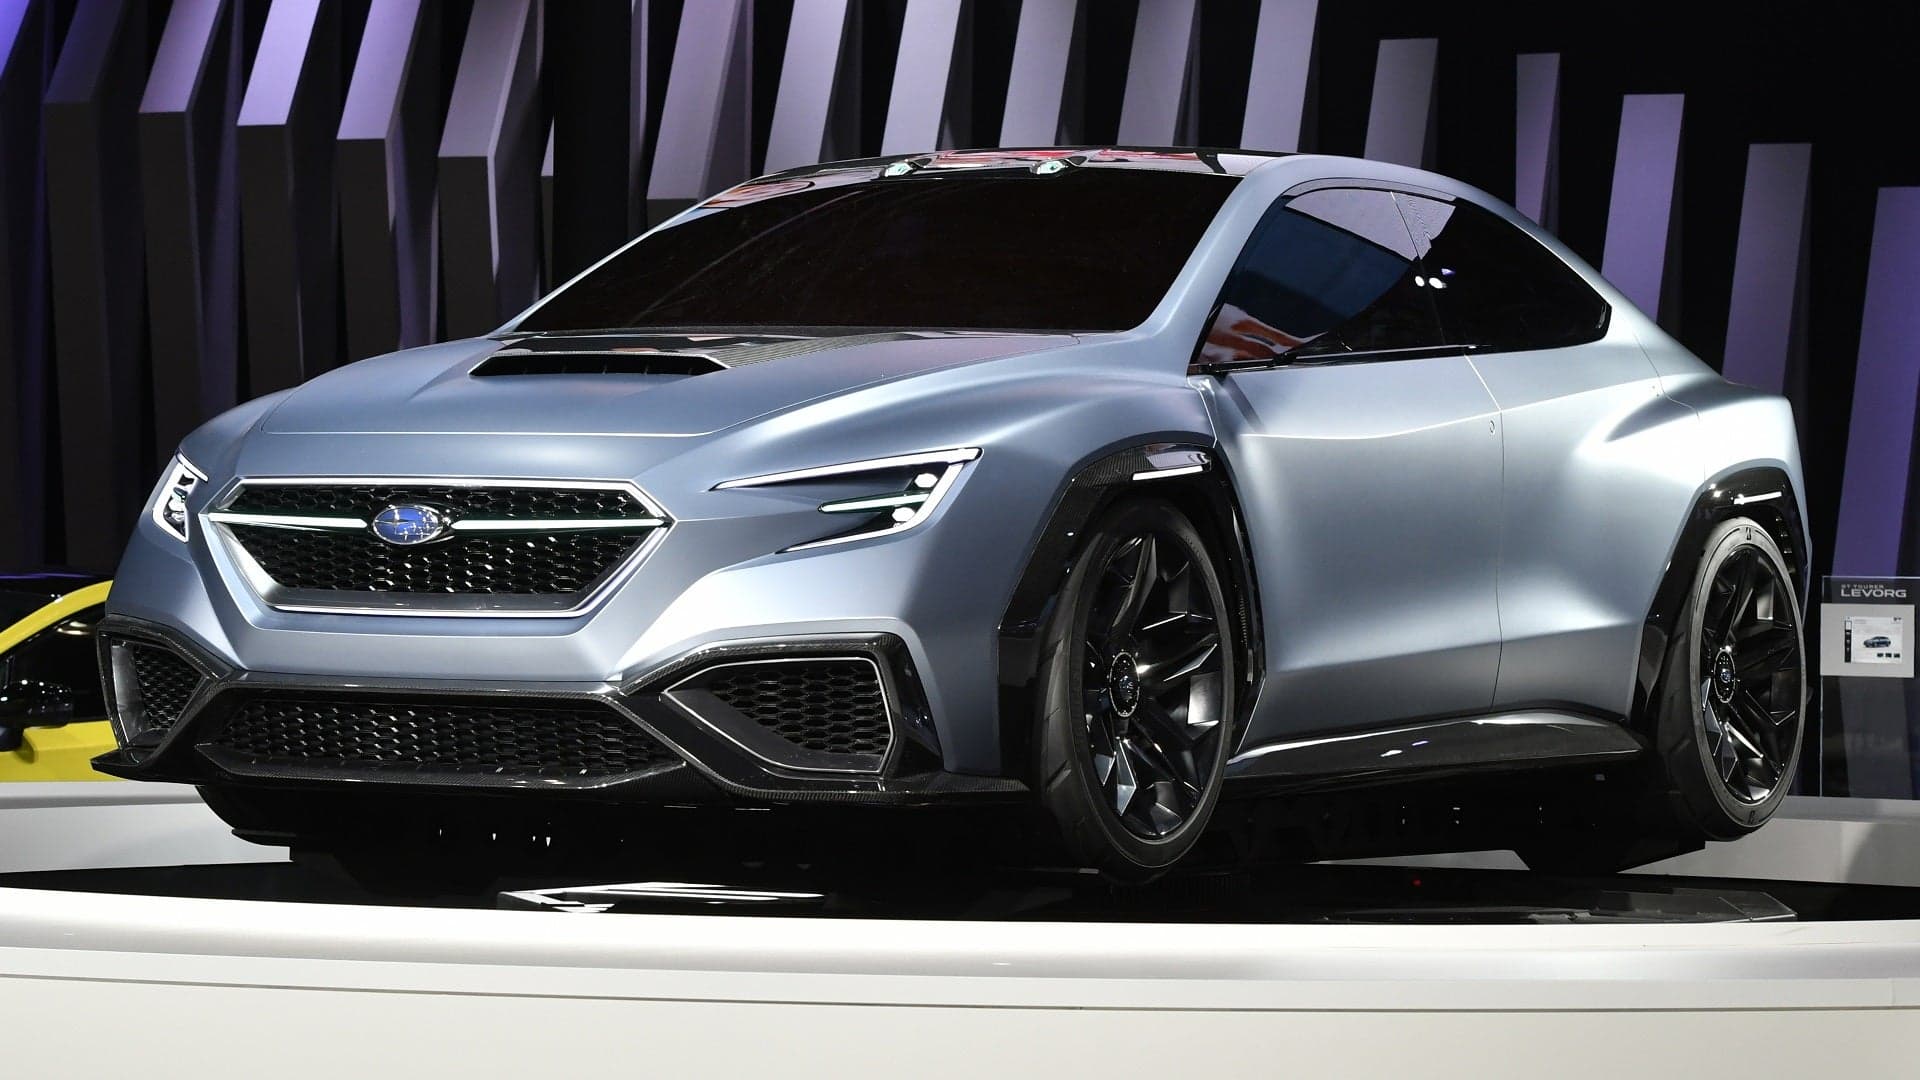 New Subaru Concept Could Presage New WRX